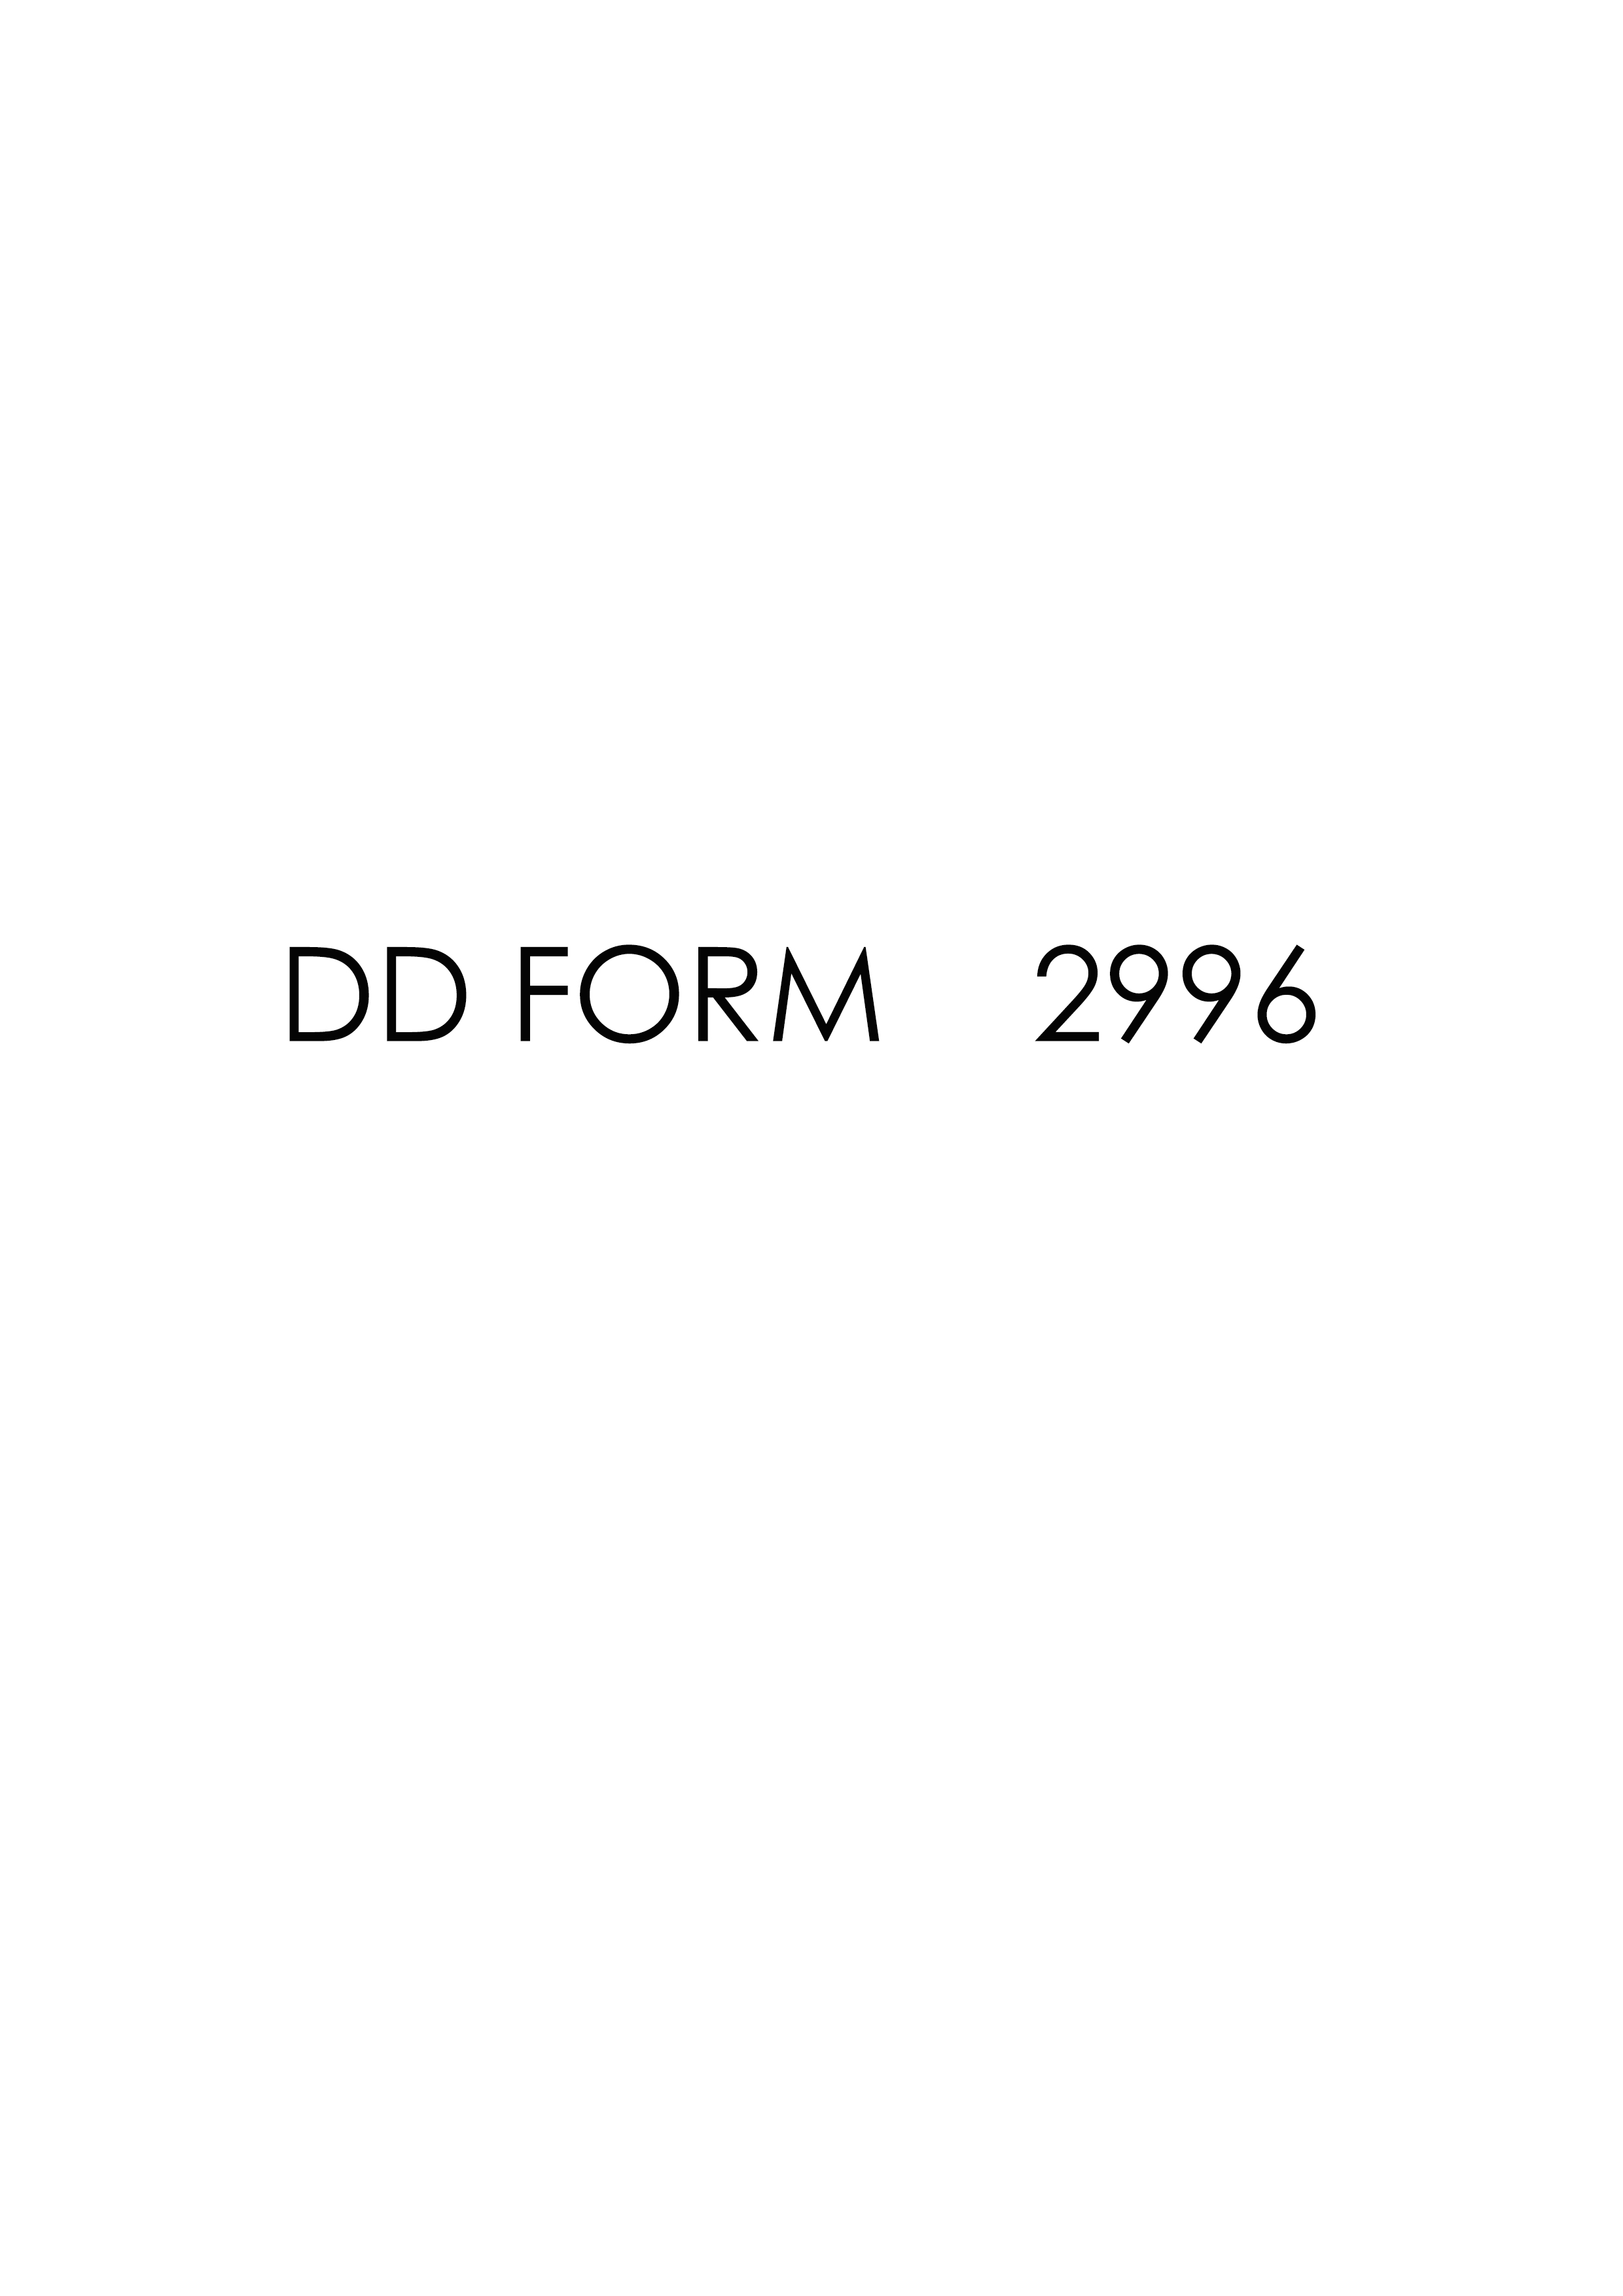 Download dd 2996 Form